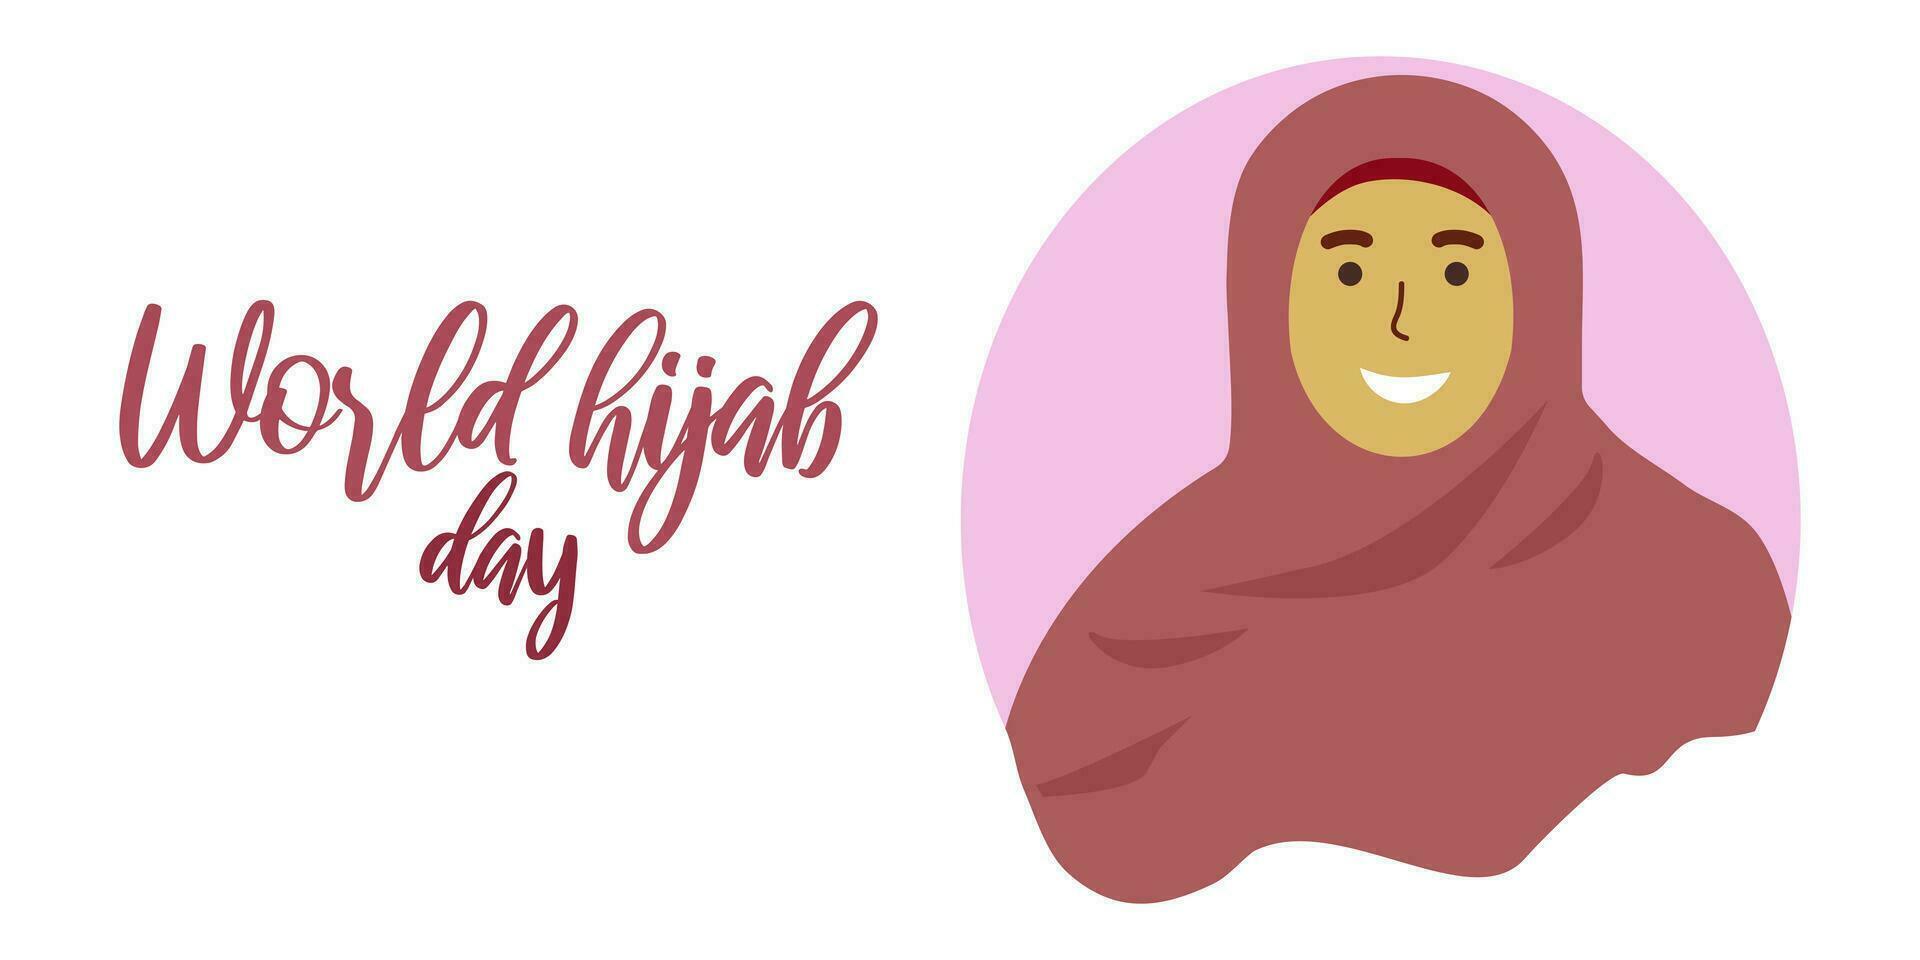 World Hijab Day February 1 popular holiday. vector